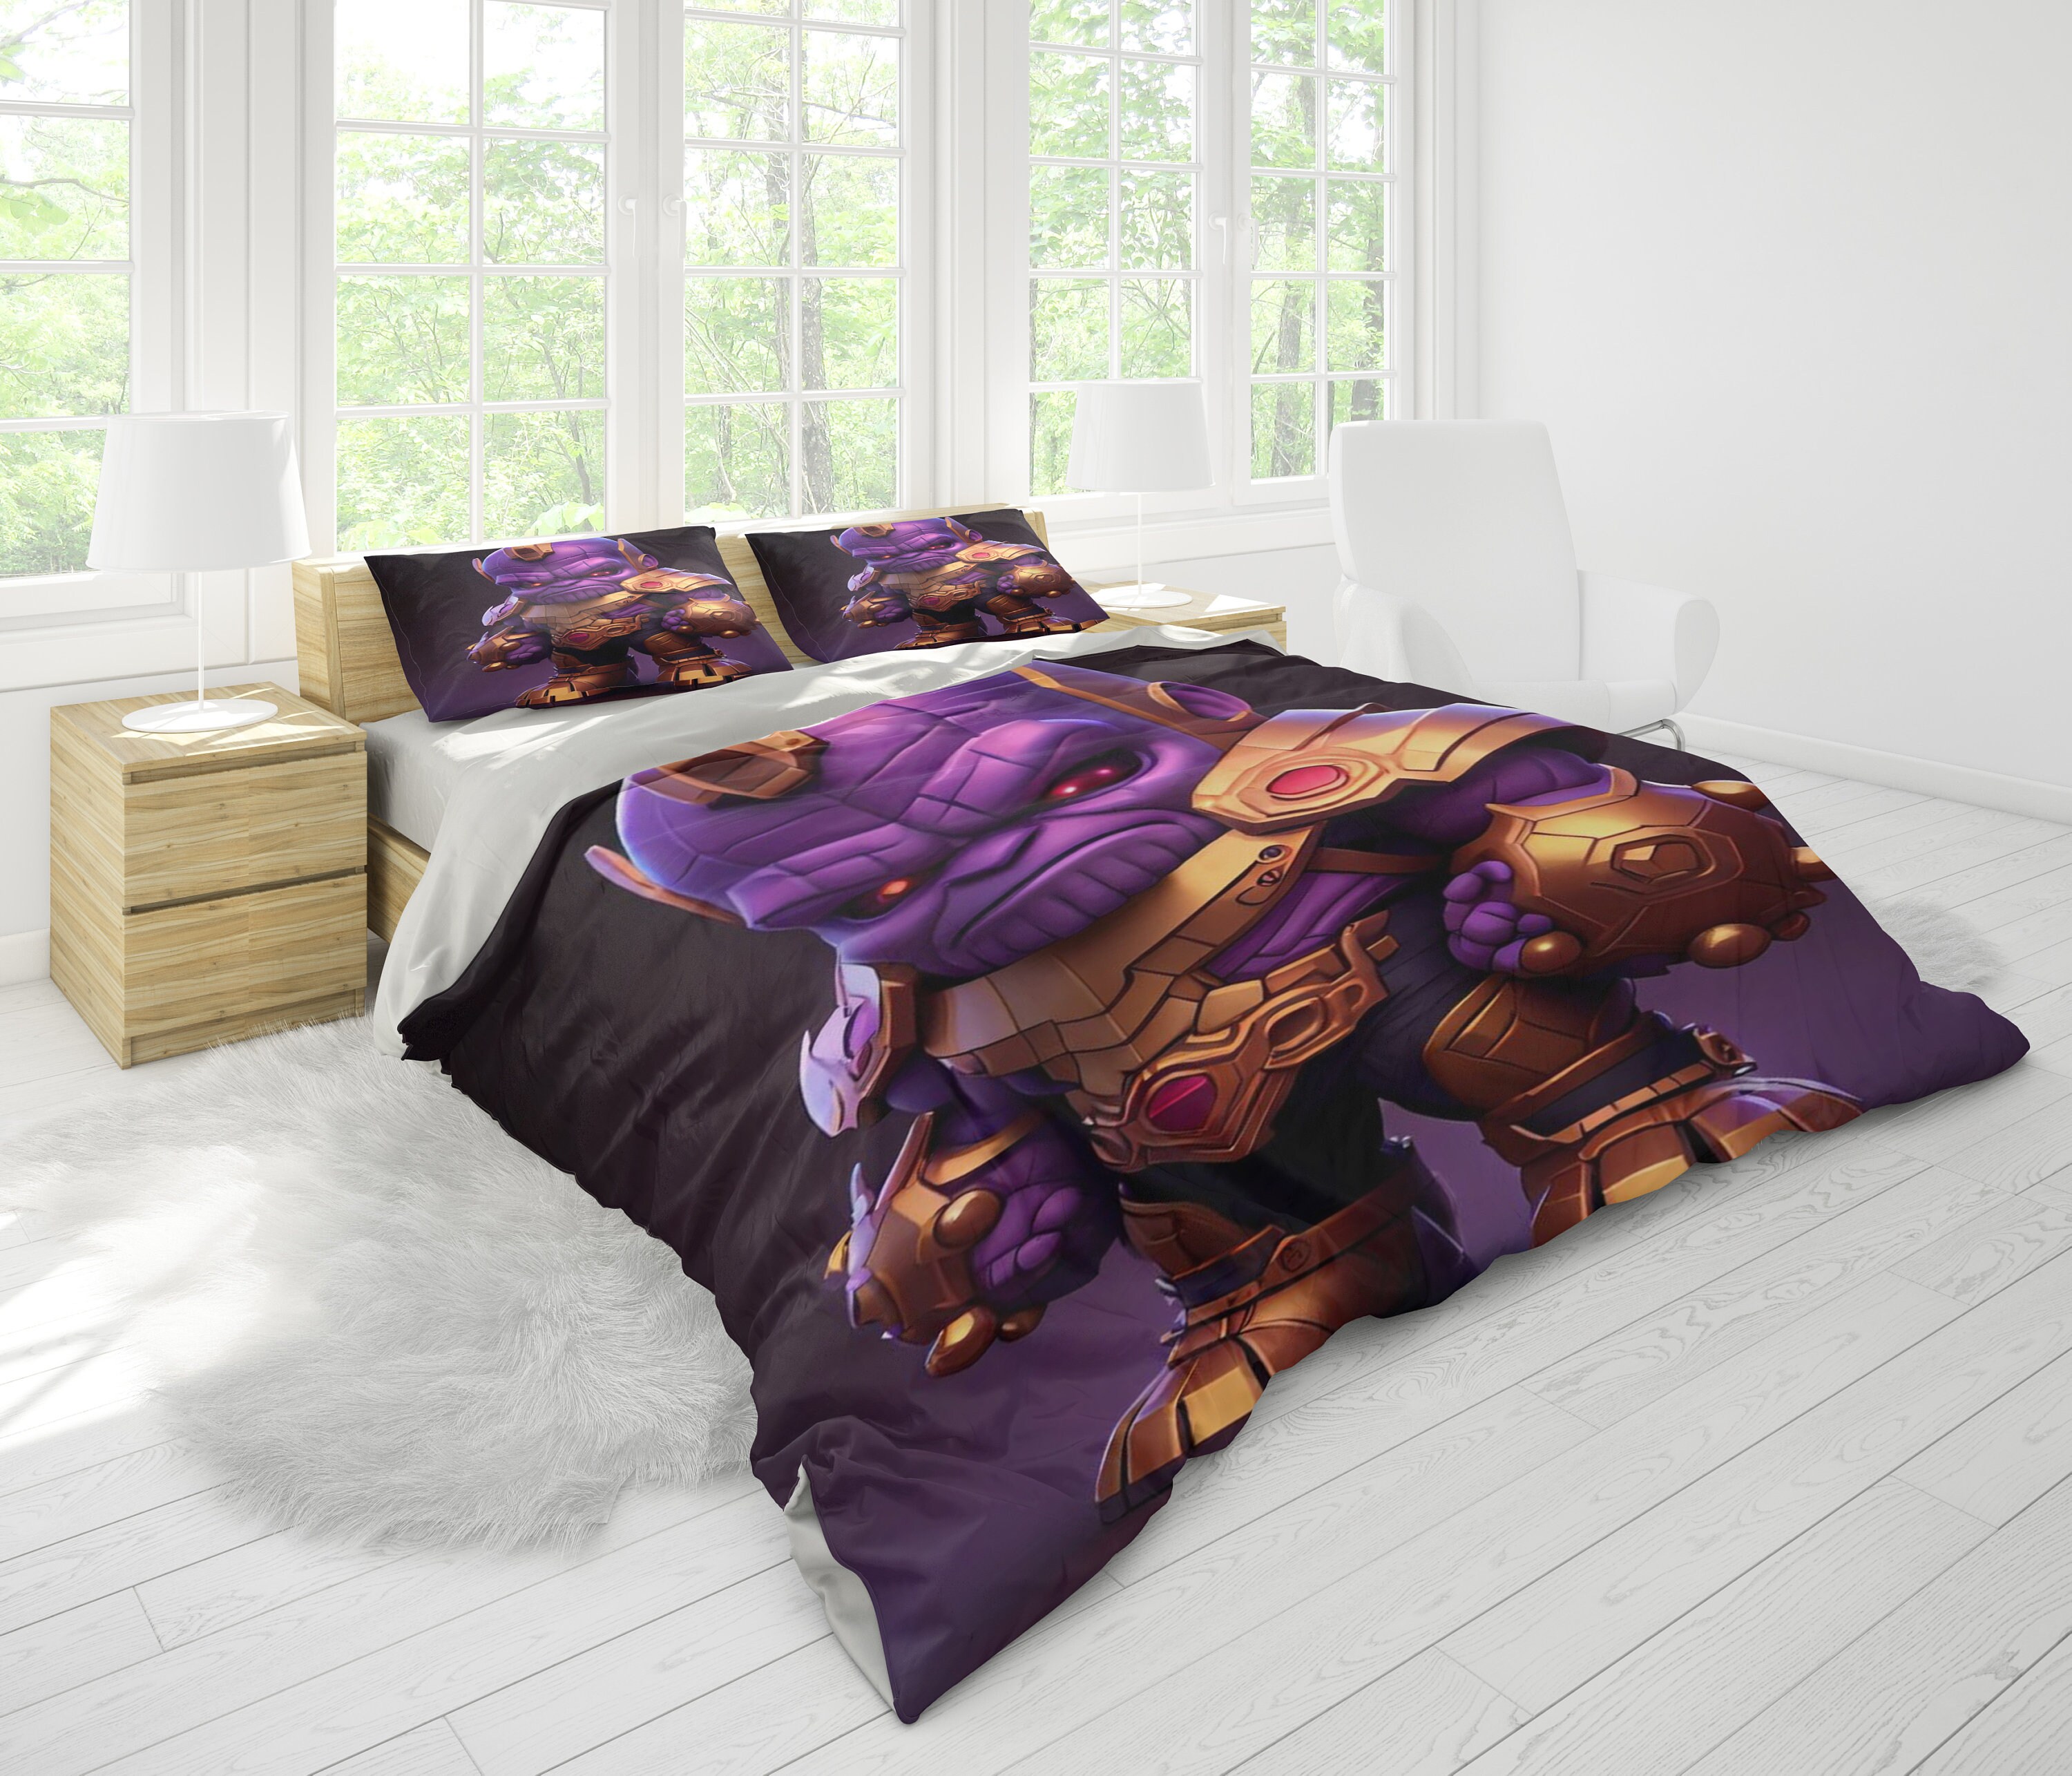 Thanos Bedding Set, Super Hero Bedroom Decoration